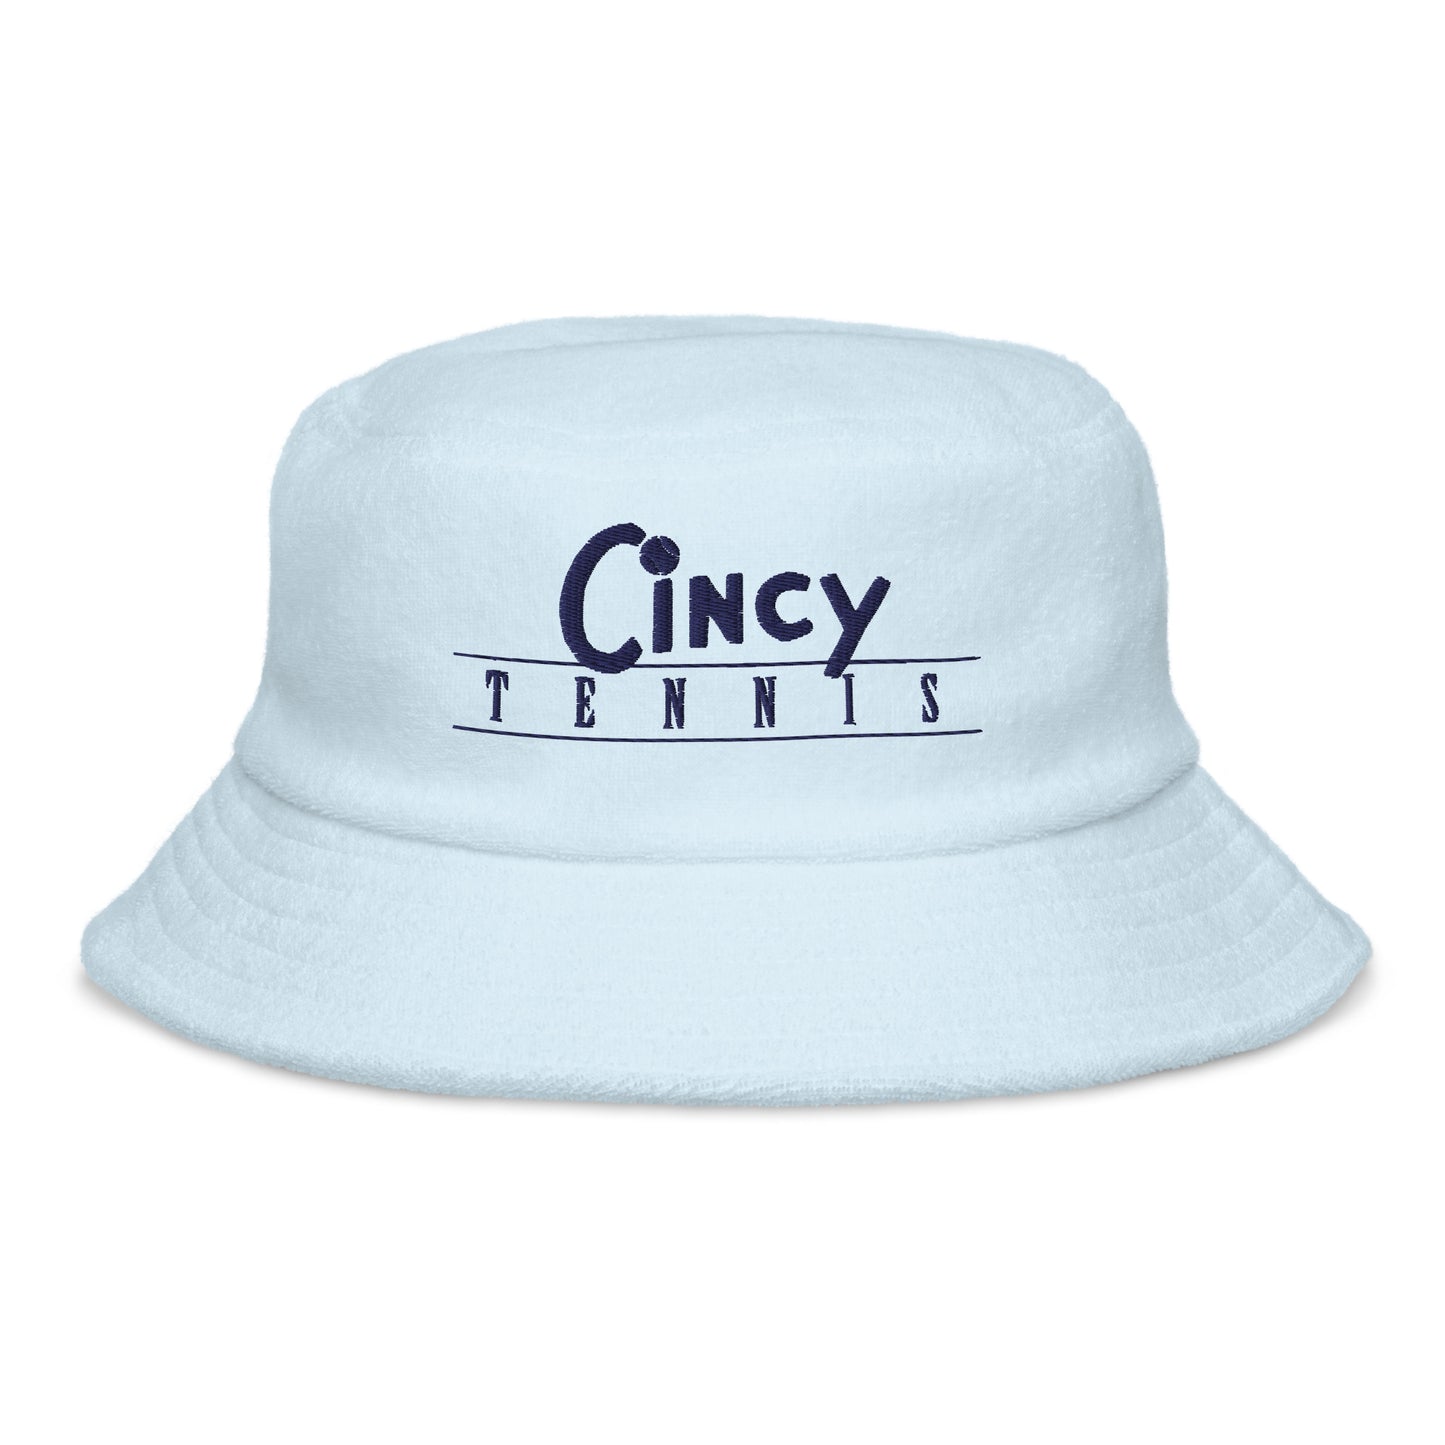 Cincy Tennis terry cloth bucket hat